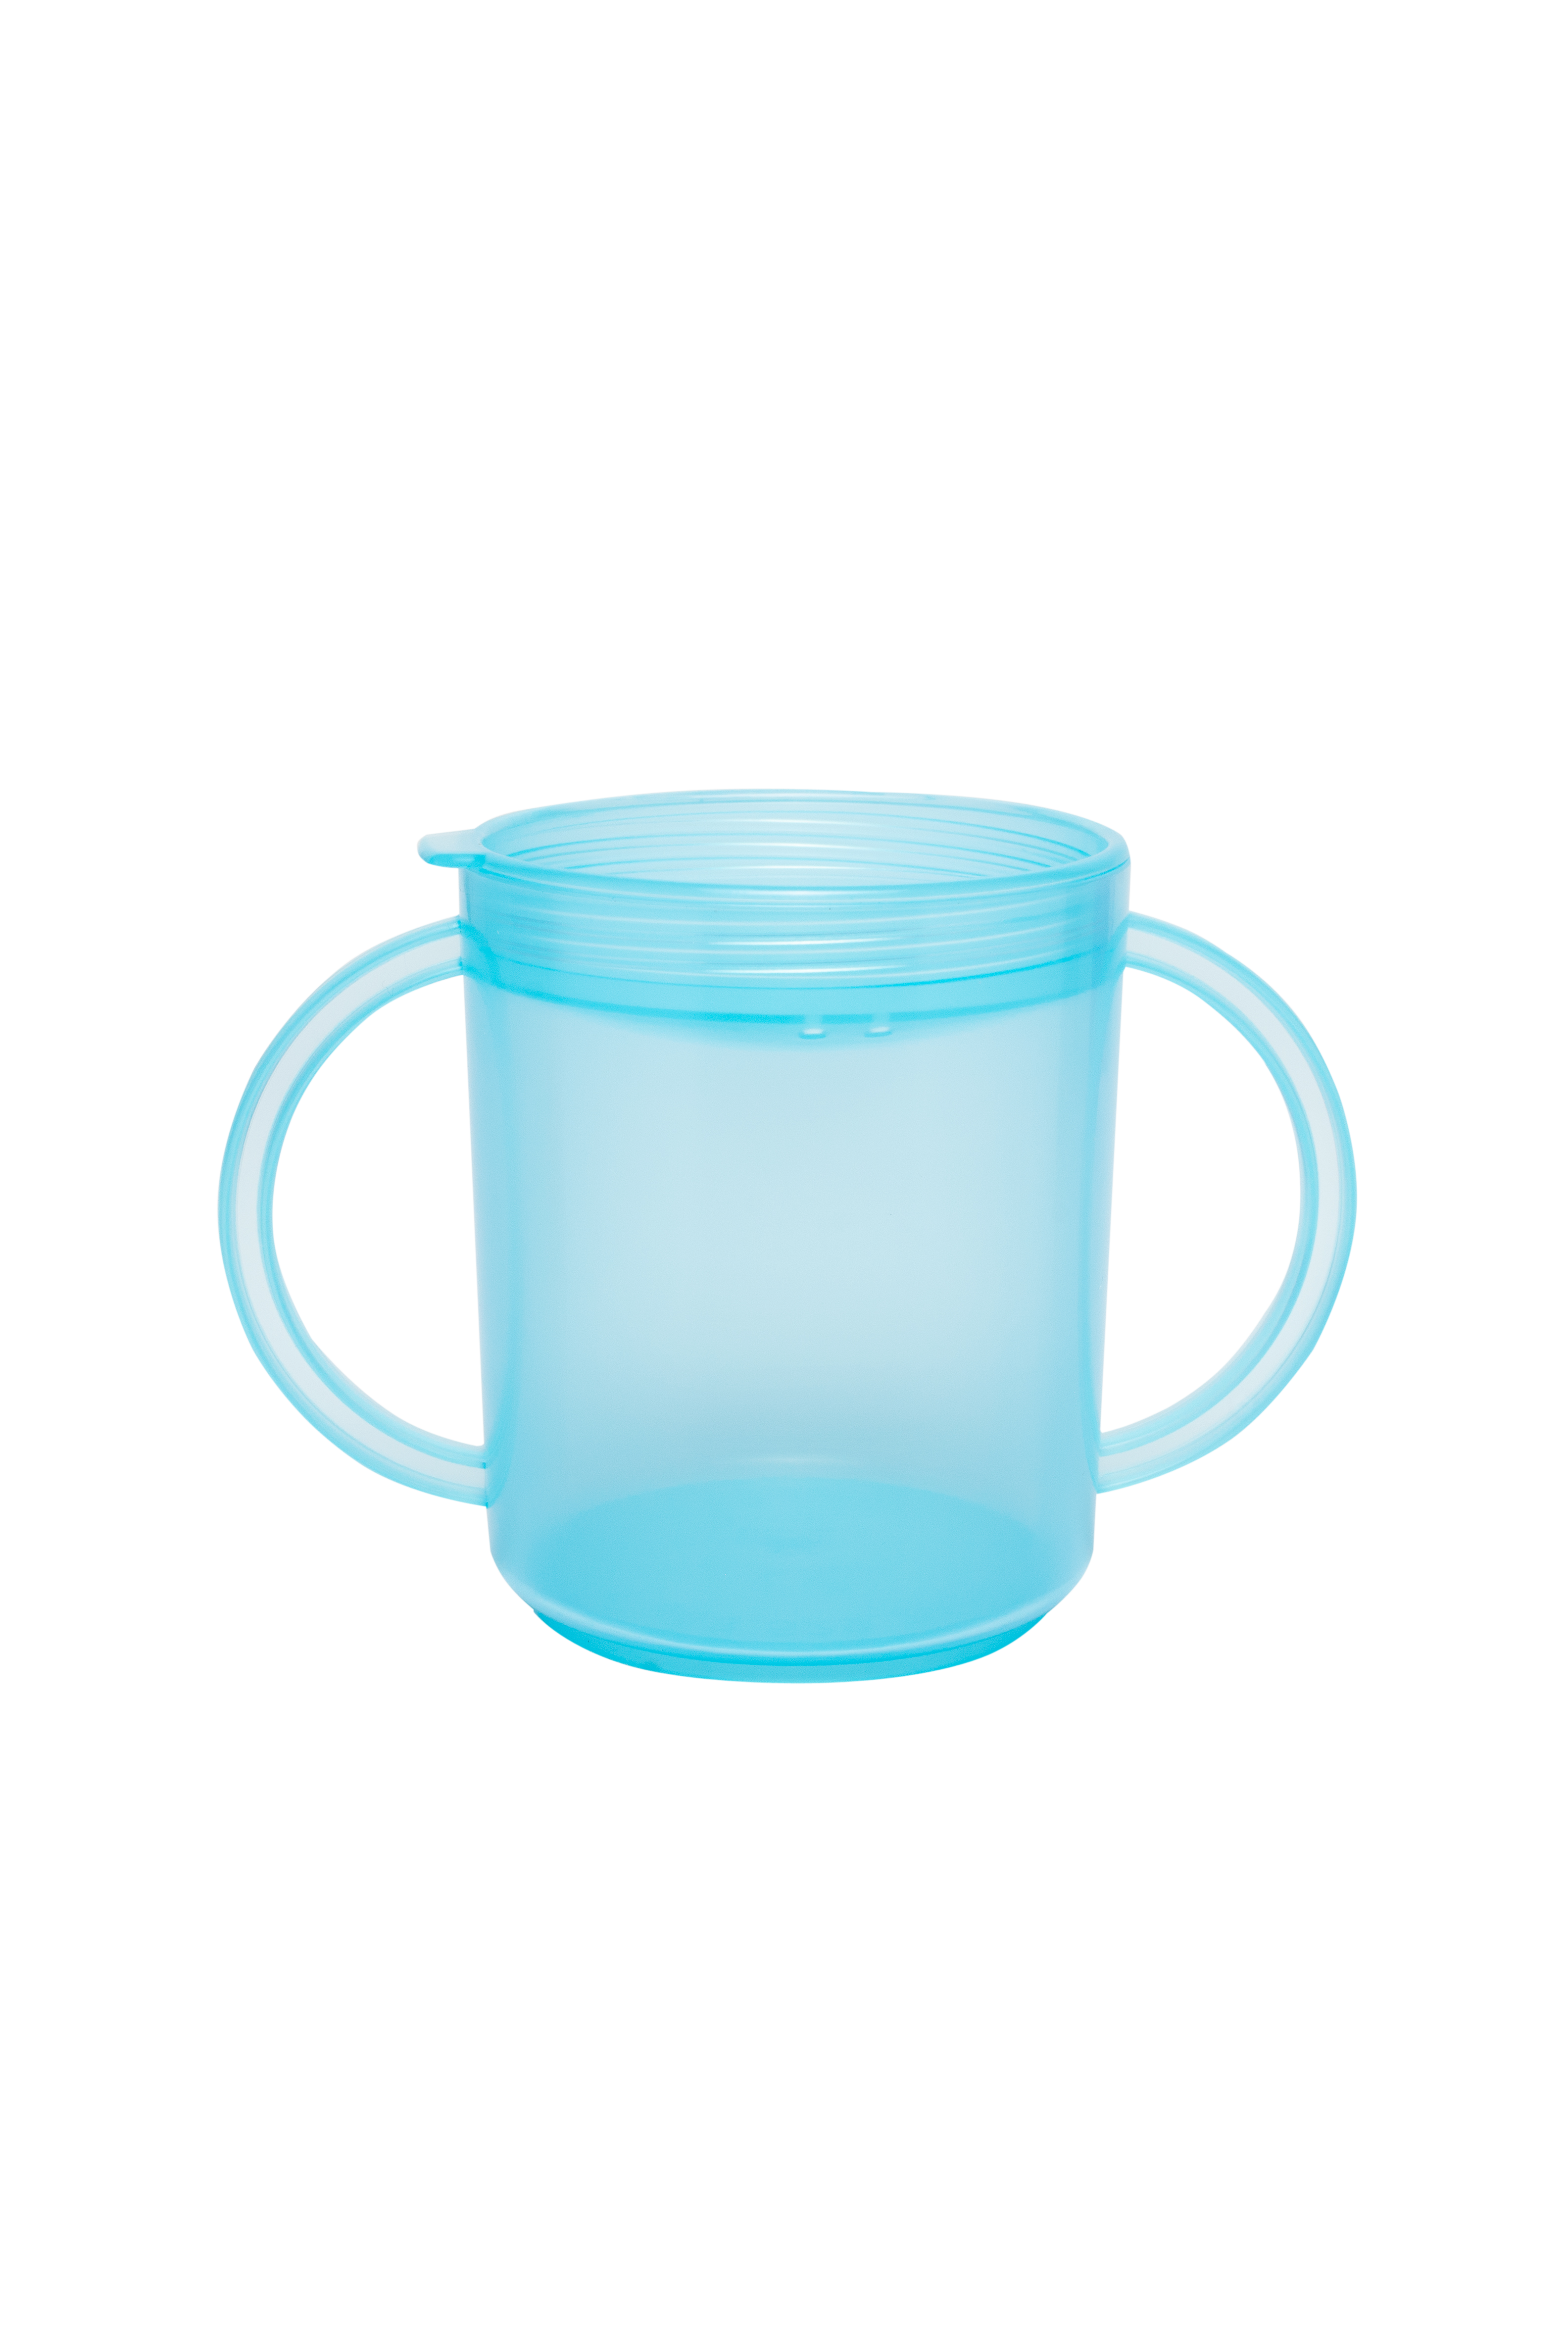 TalkTools Recessed Plastic Lid Cup with Handles | Break Resistant | Self-Feeding - BPA Free - 2 Lids - Light Blue